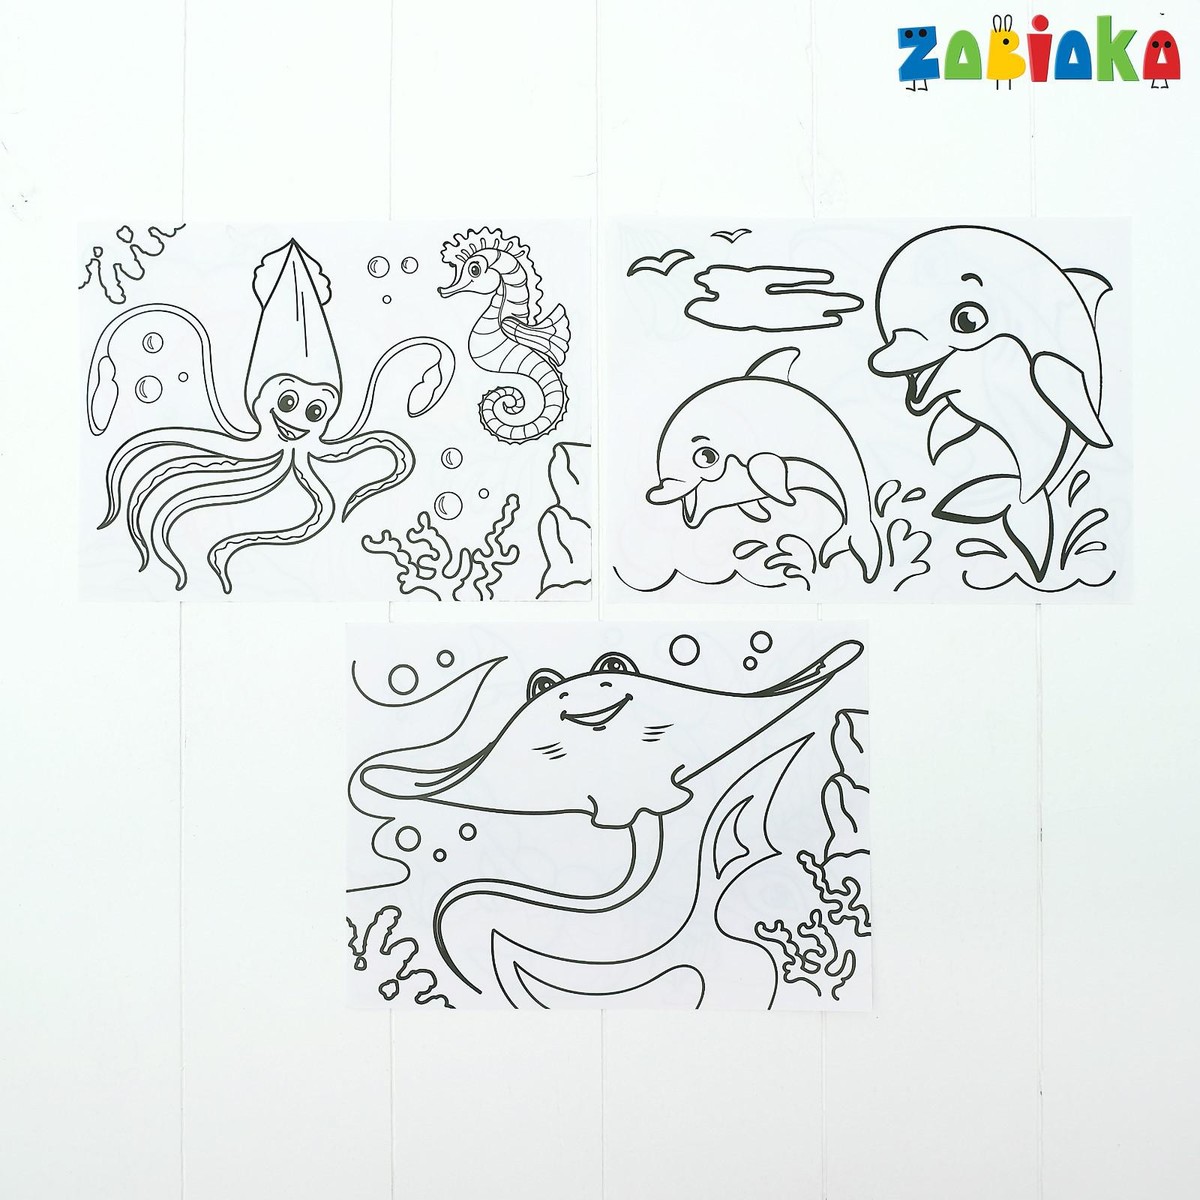 фото 3d-доска для рисования неоновыми маркерами zabiaka